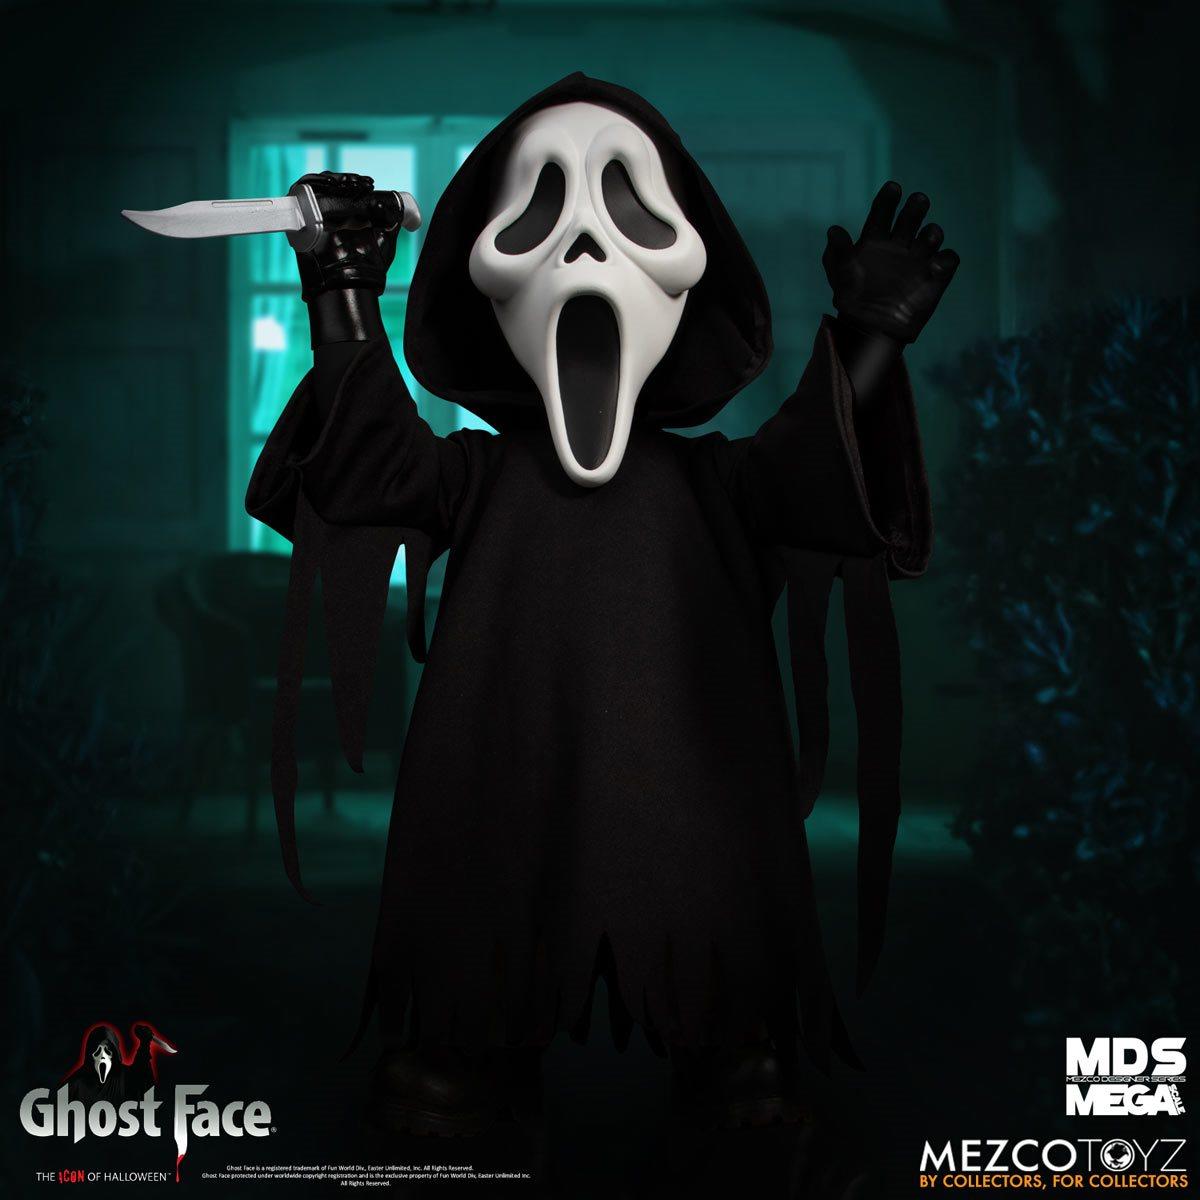 Ghostface 15-Inch Doll Arrives For Scream VI